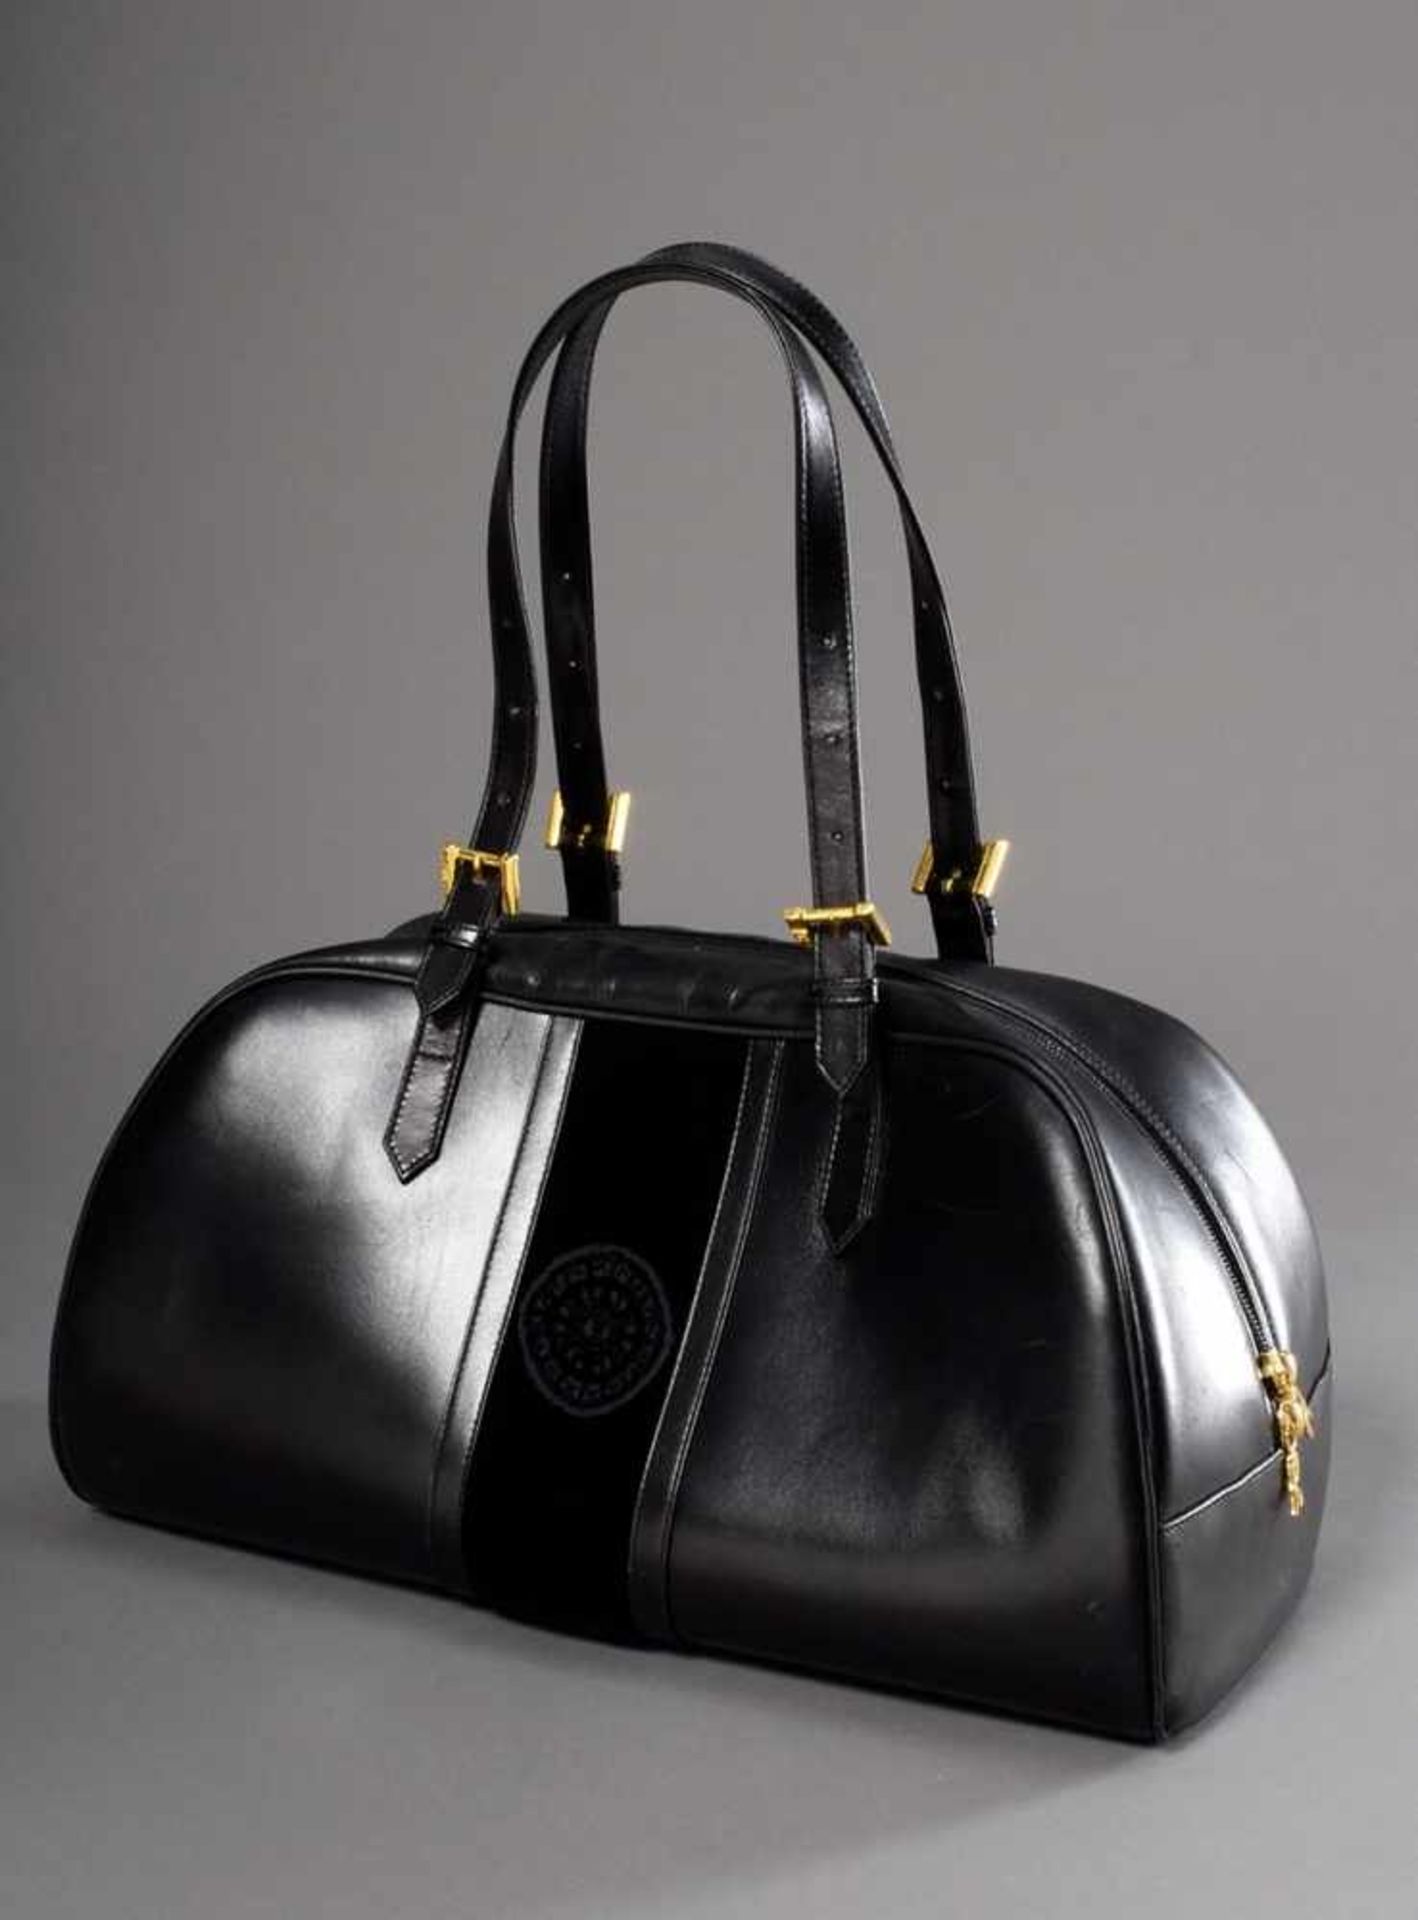 Roberta ladies handbag in black leather/velvet, 20x38x19cm, slight signs of use